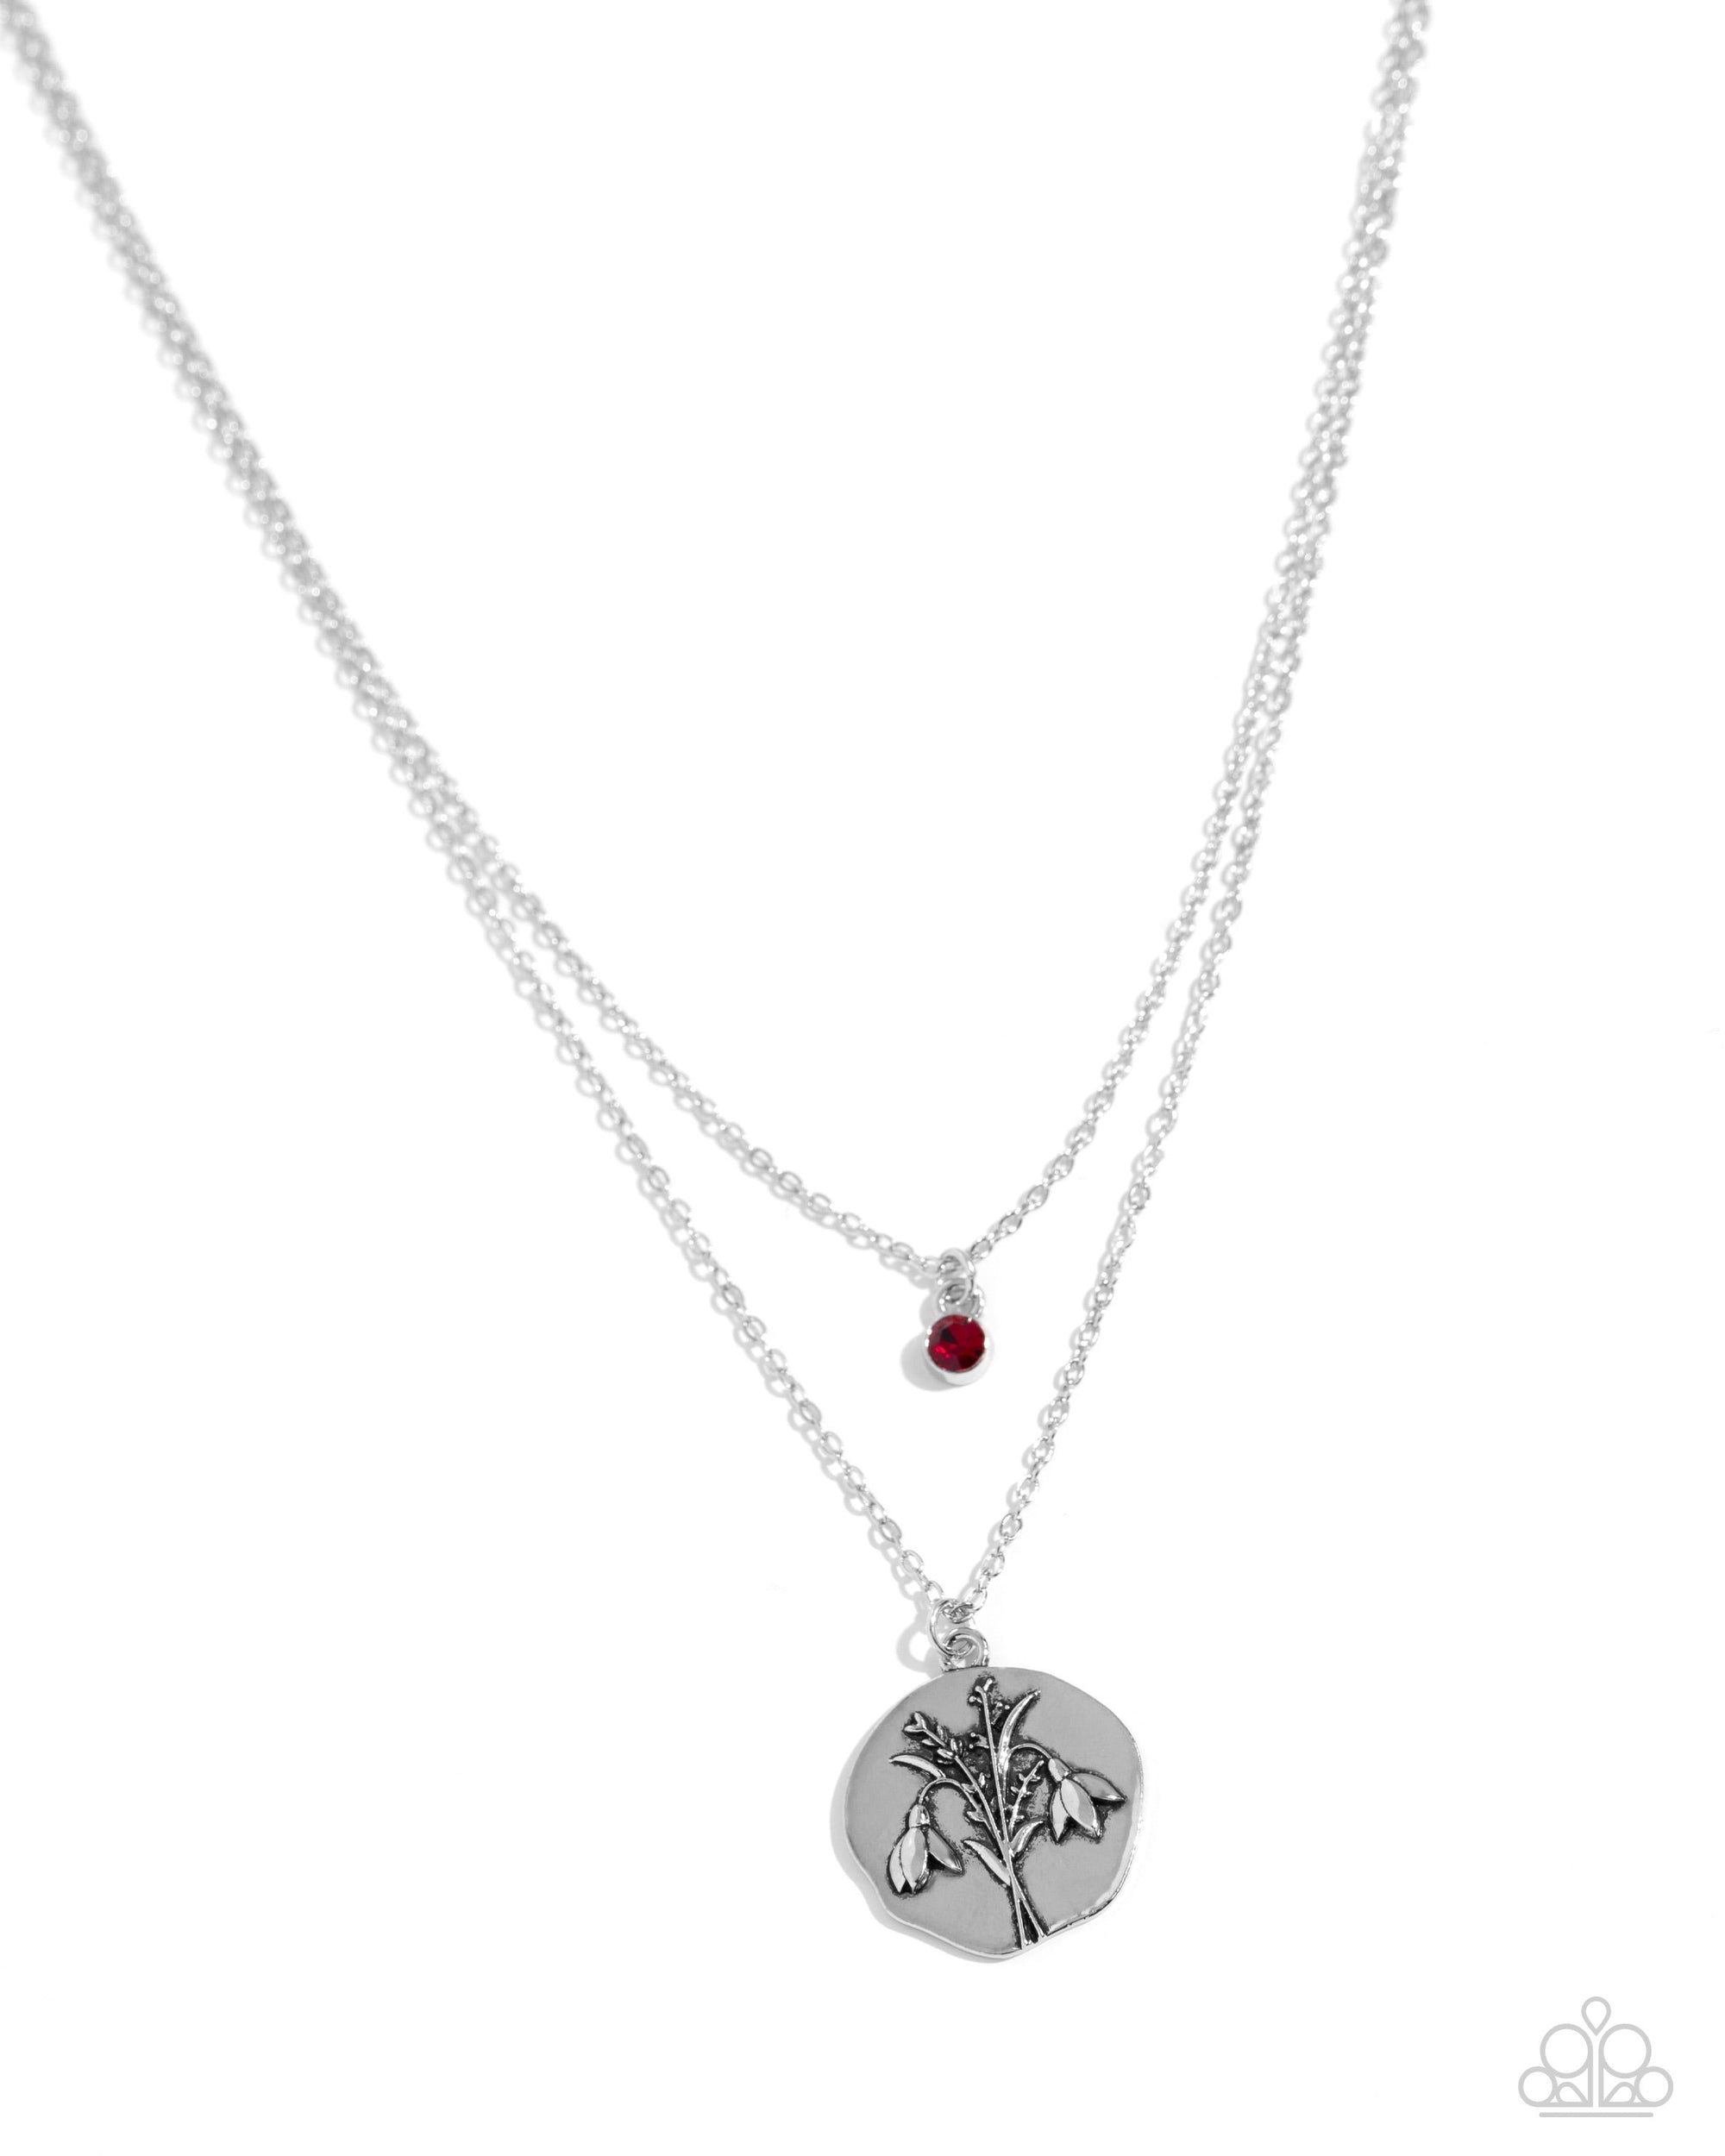 Birthstone Beauty (January) Garnet Red Rhinestone Necklace - Paparazzi Accessories- lightbox - CarasShop.com - $5 Jewelry by Cara Jewels